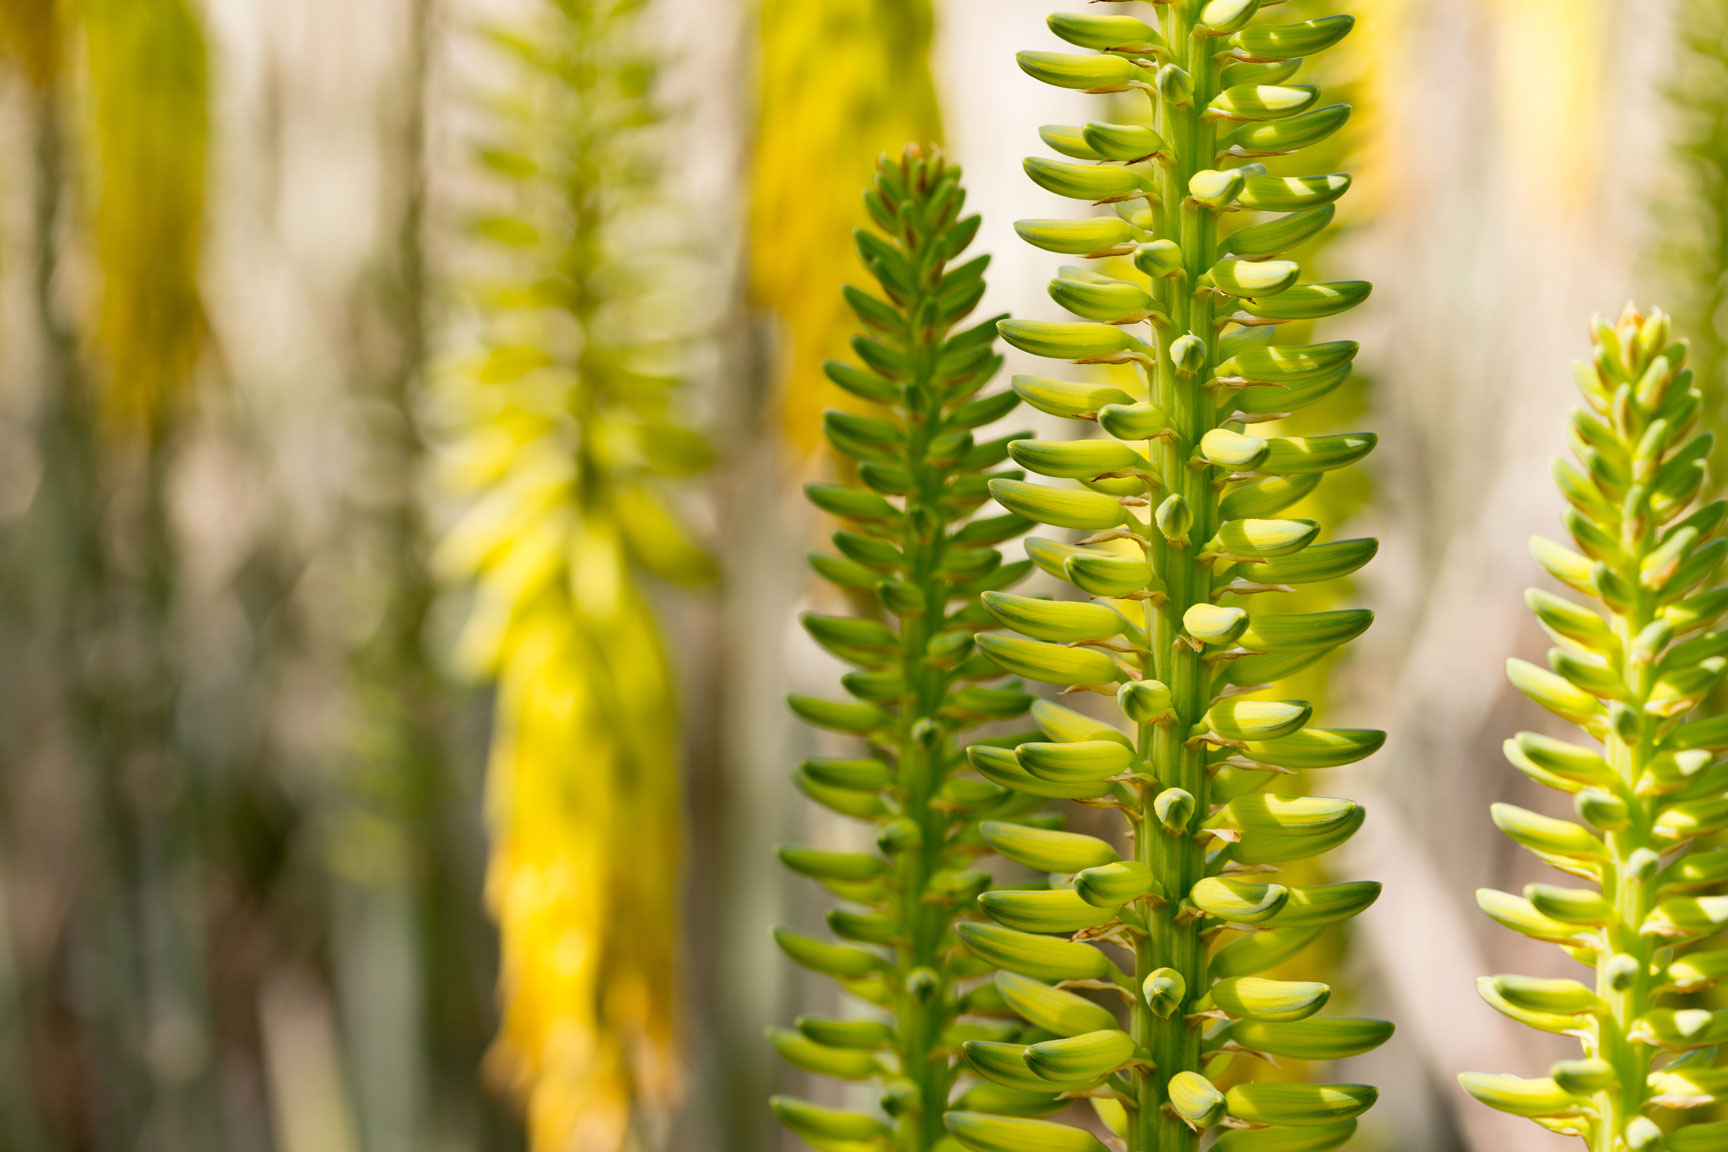 A close-up of bright yellow, tubular aloe flowers along multiple stalks.